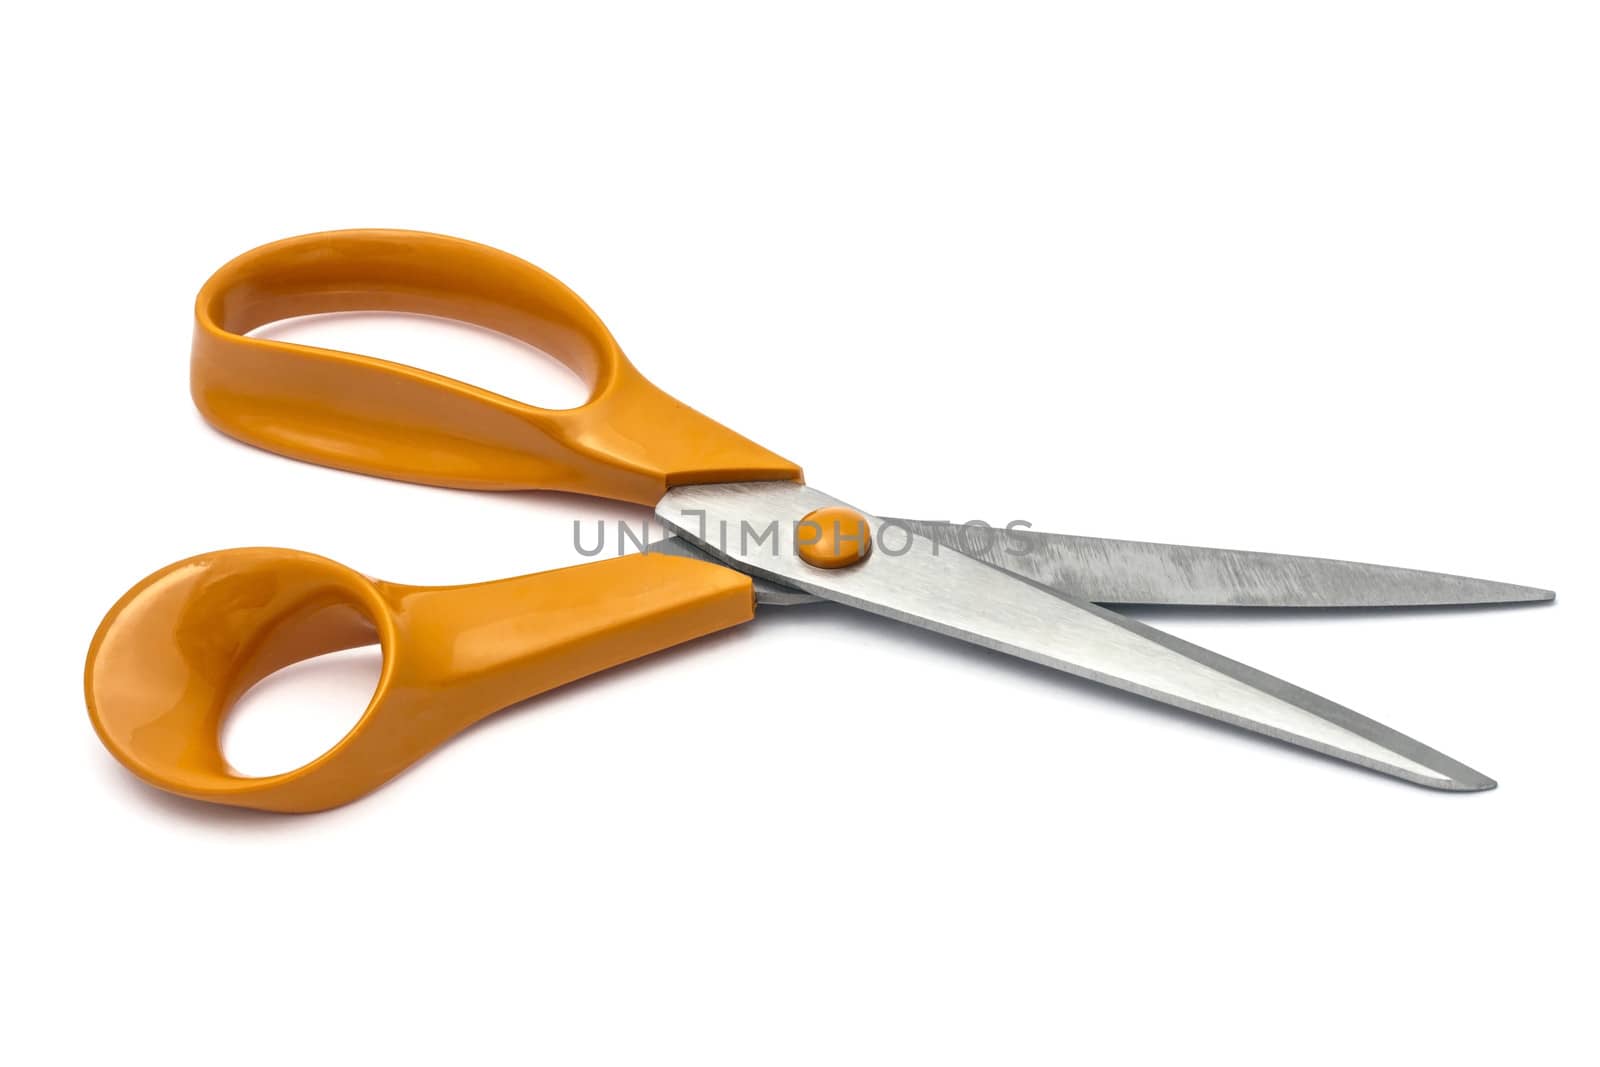  scissors  by ibphoto